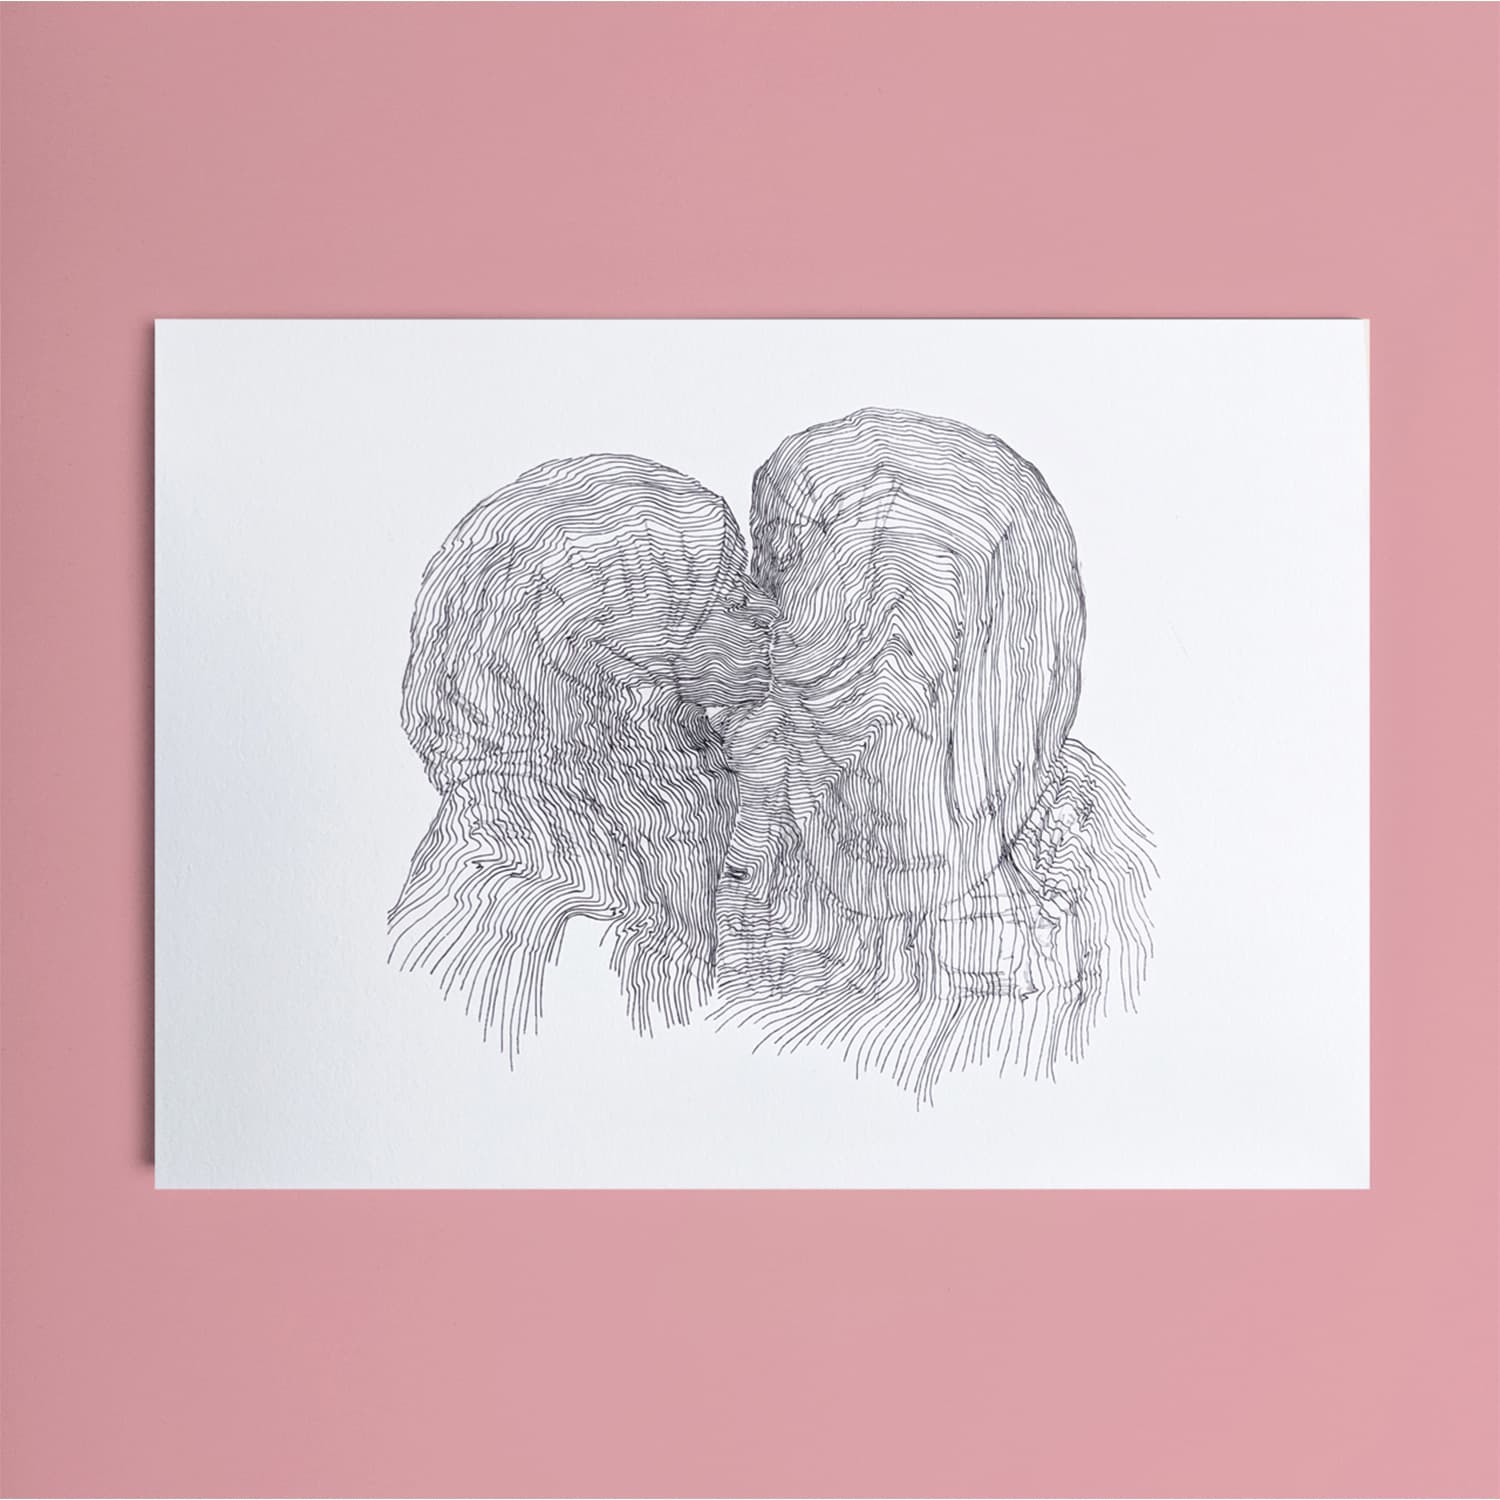 Kiss of Equality-Figurative kiss of equality artwork